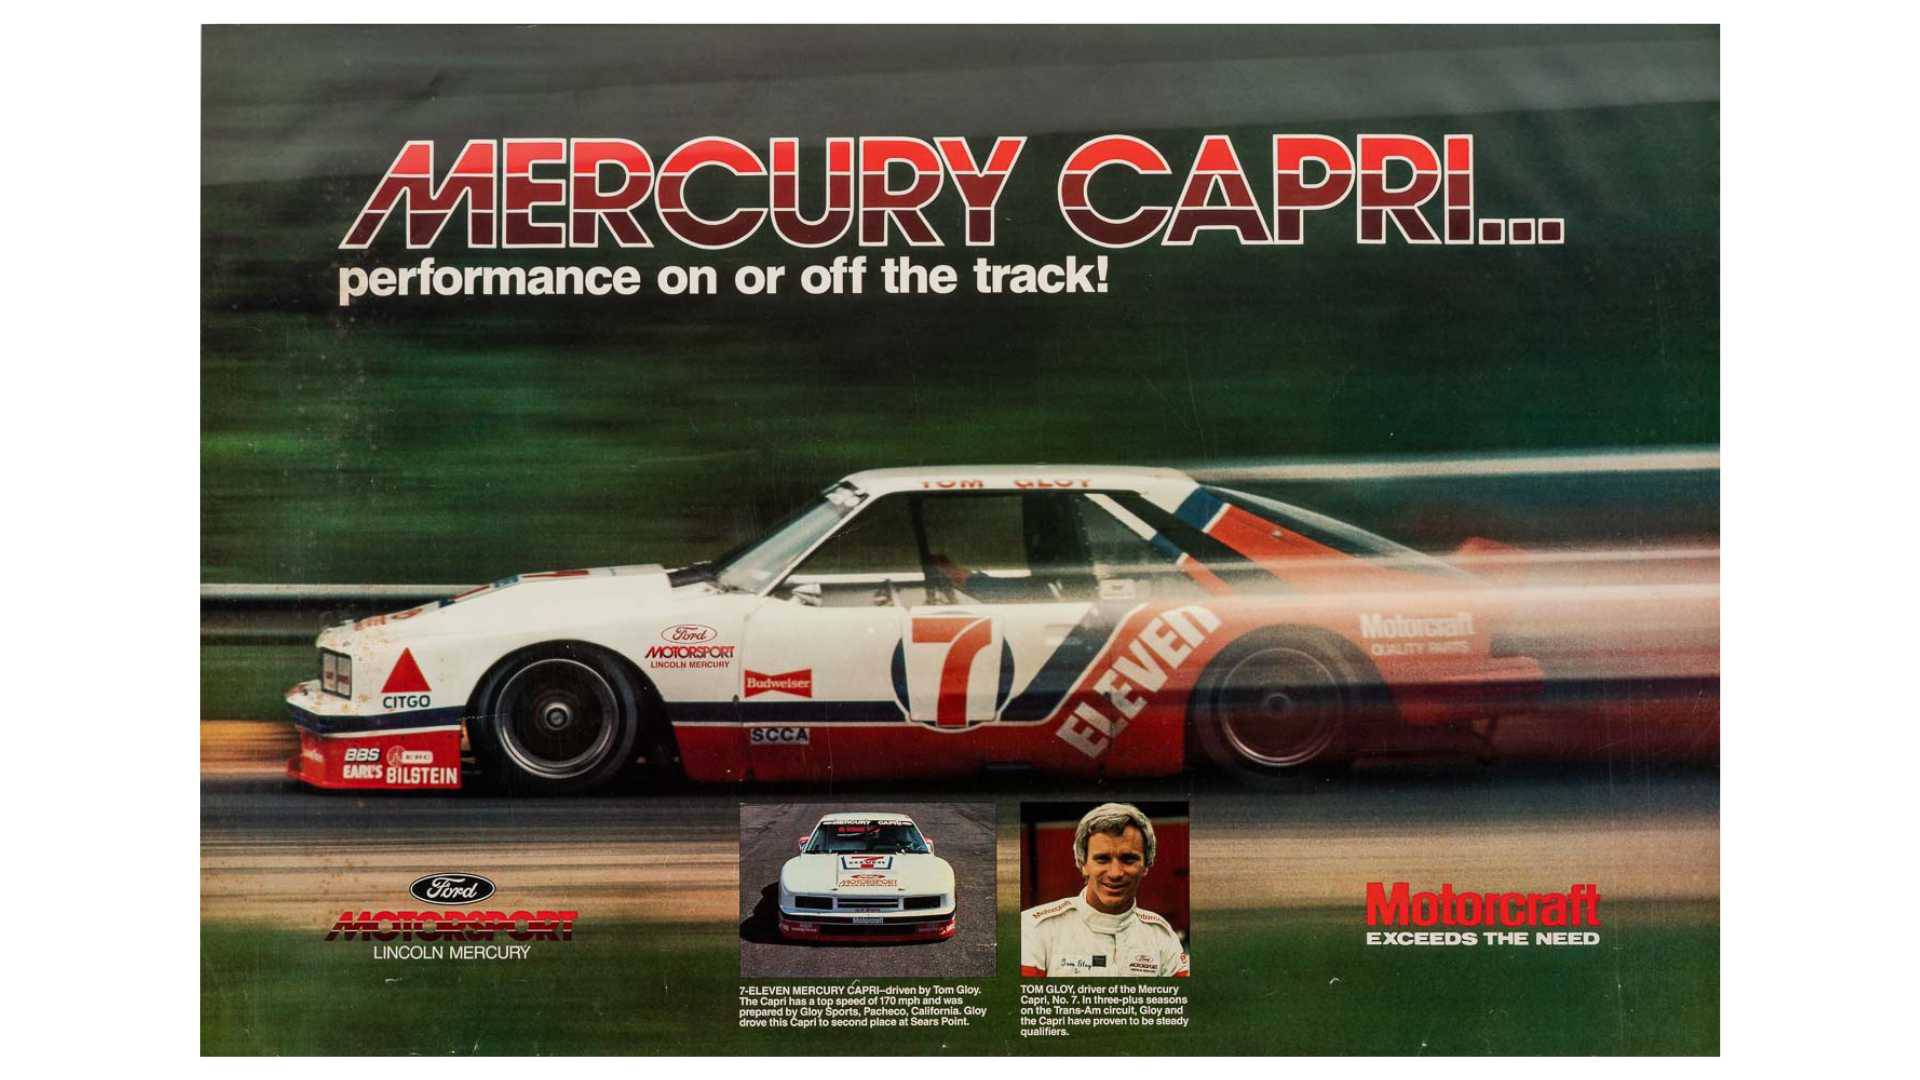 7-Eleven Mercury Capri Poster Auction